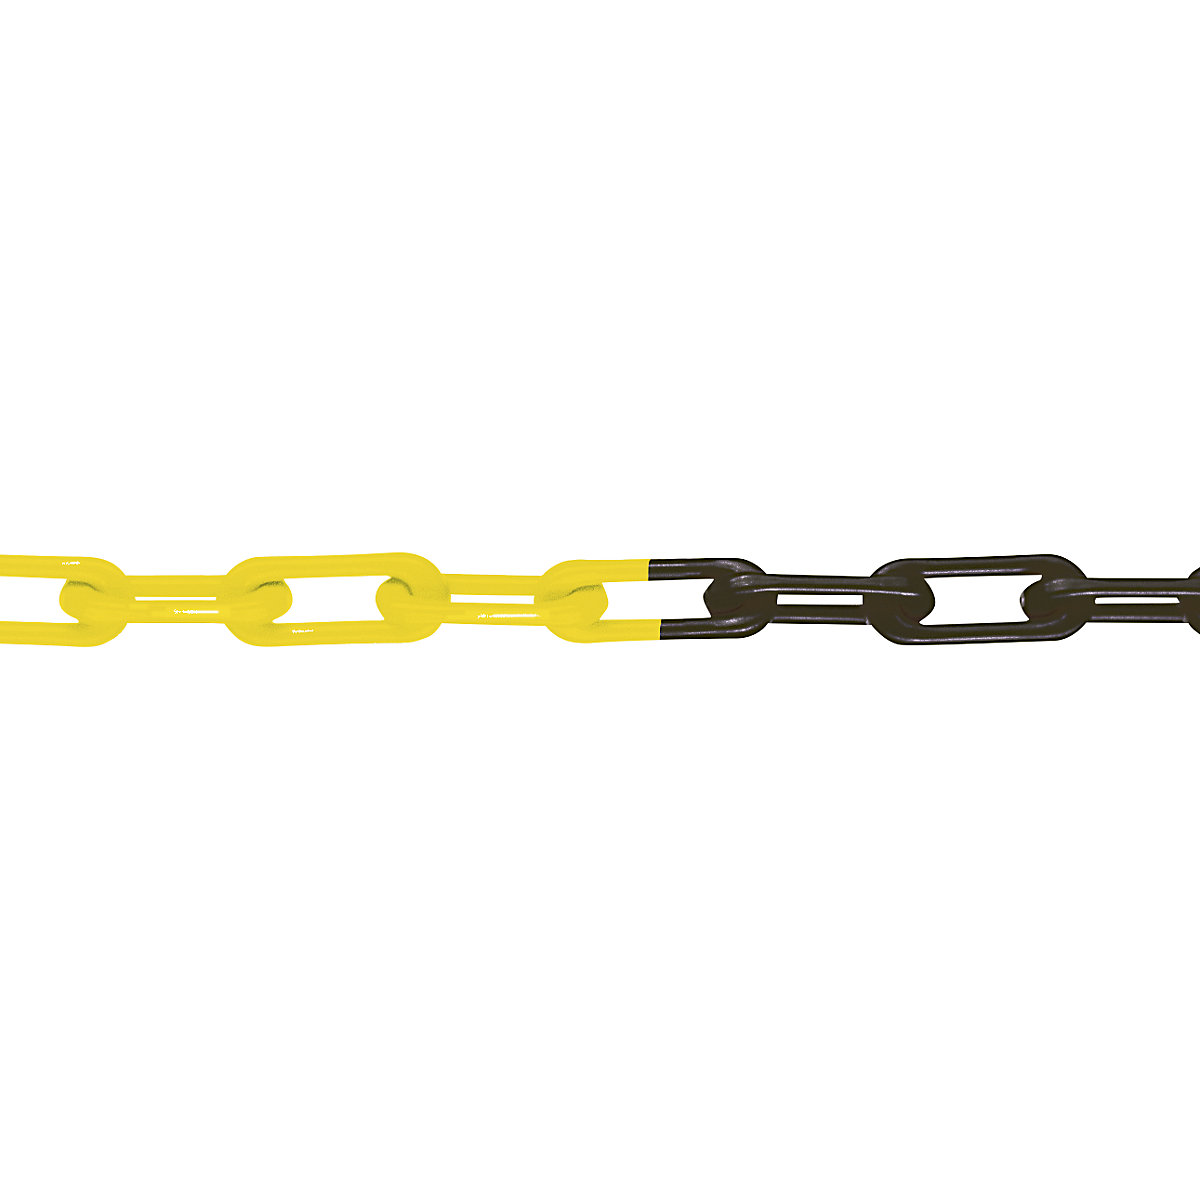 Nylon chain, MNK quality standard 6, band length 50 m, black/yellow-2